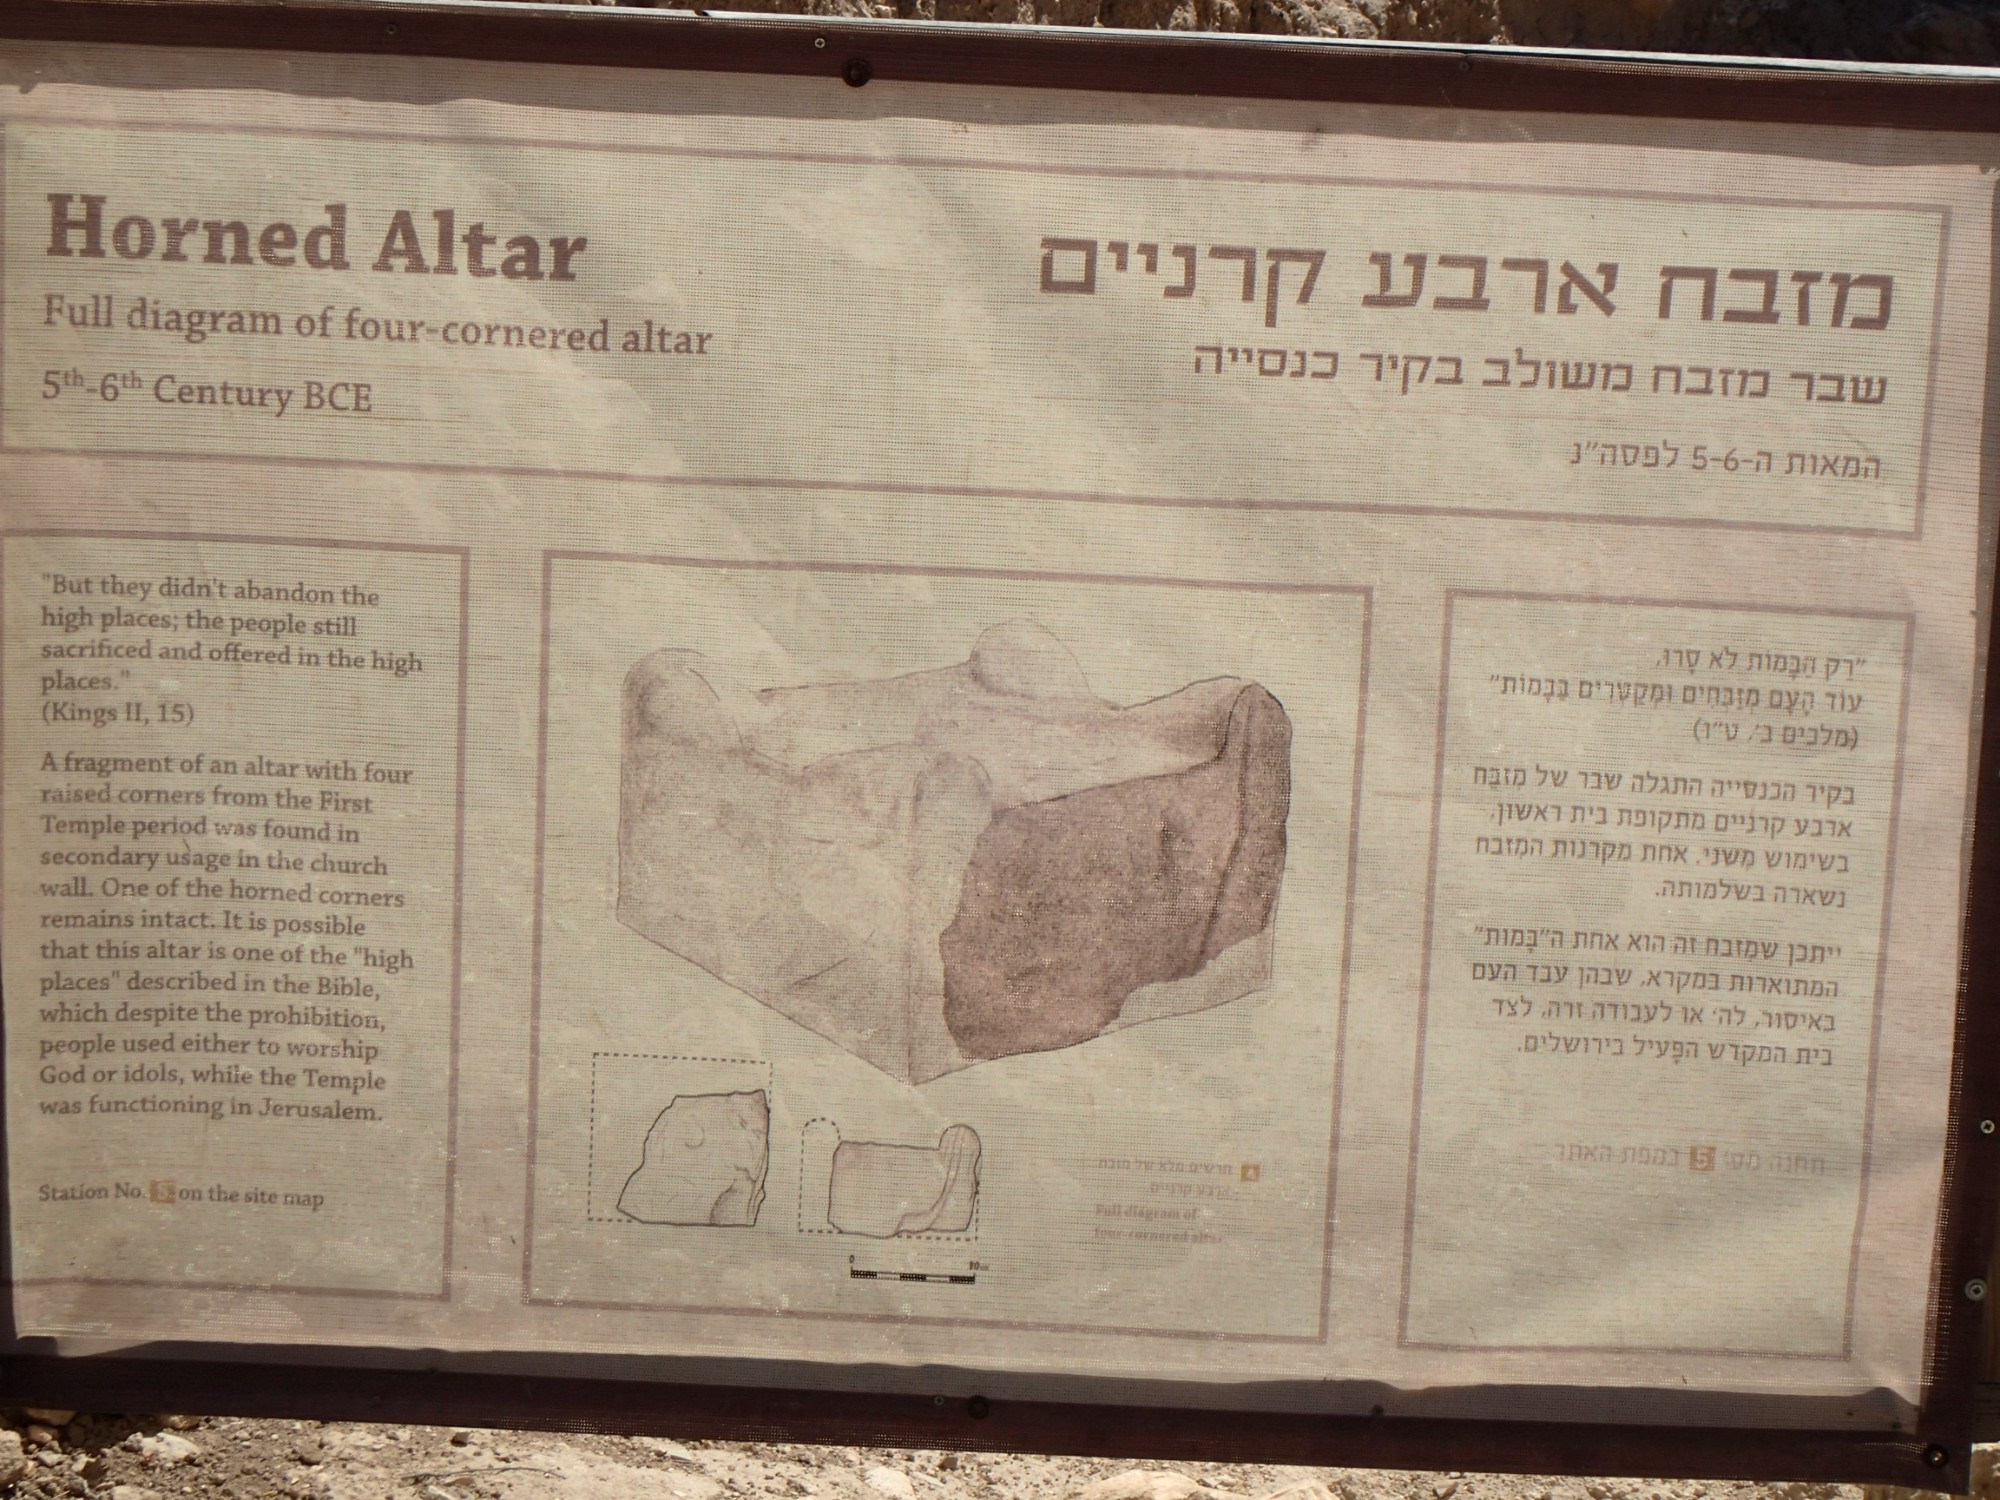 Horned Altar, Palestine